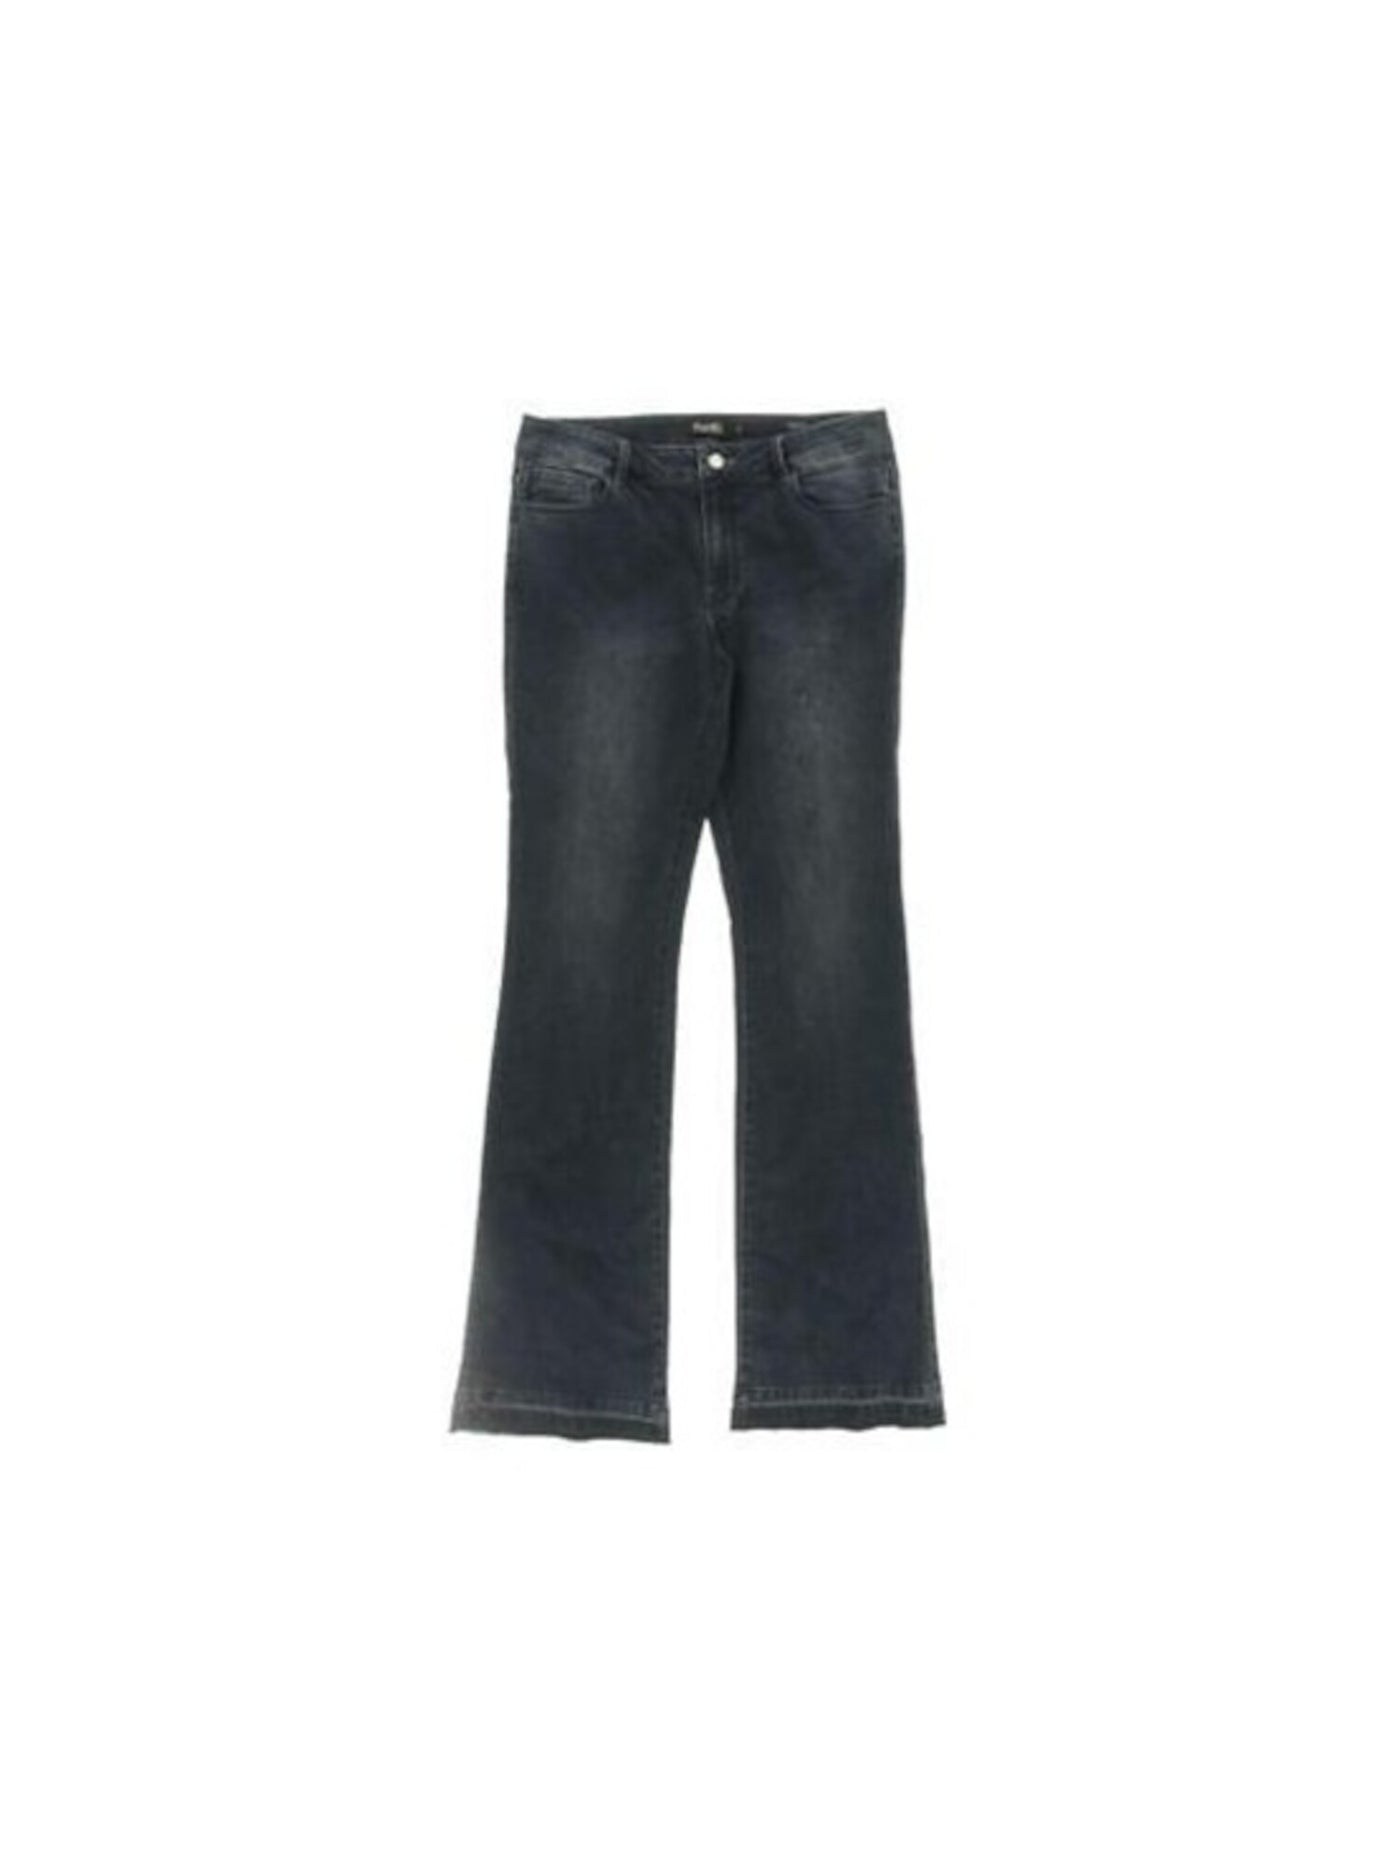 NANETTE LEPORE Womens Blue Boot Cut Jeans 10